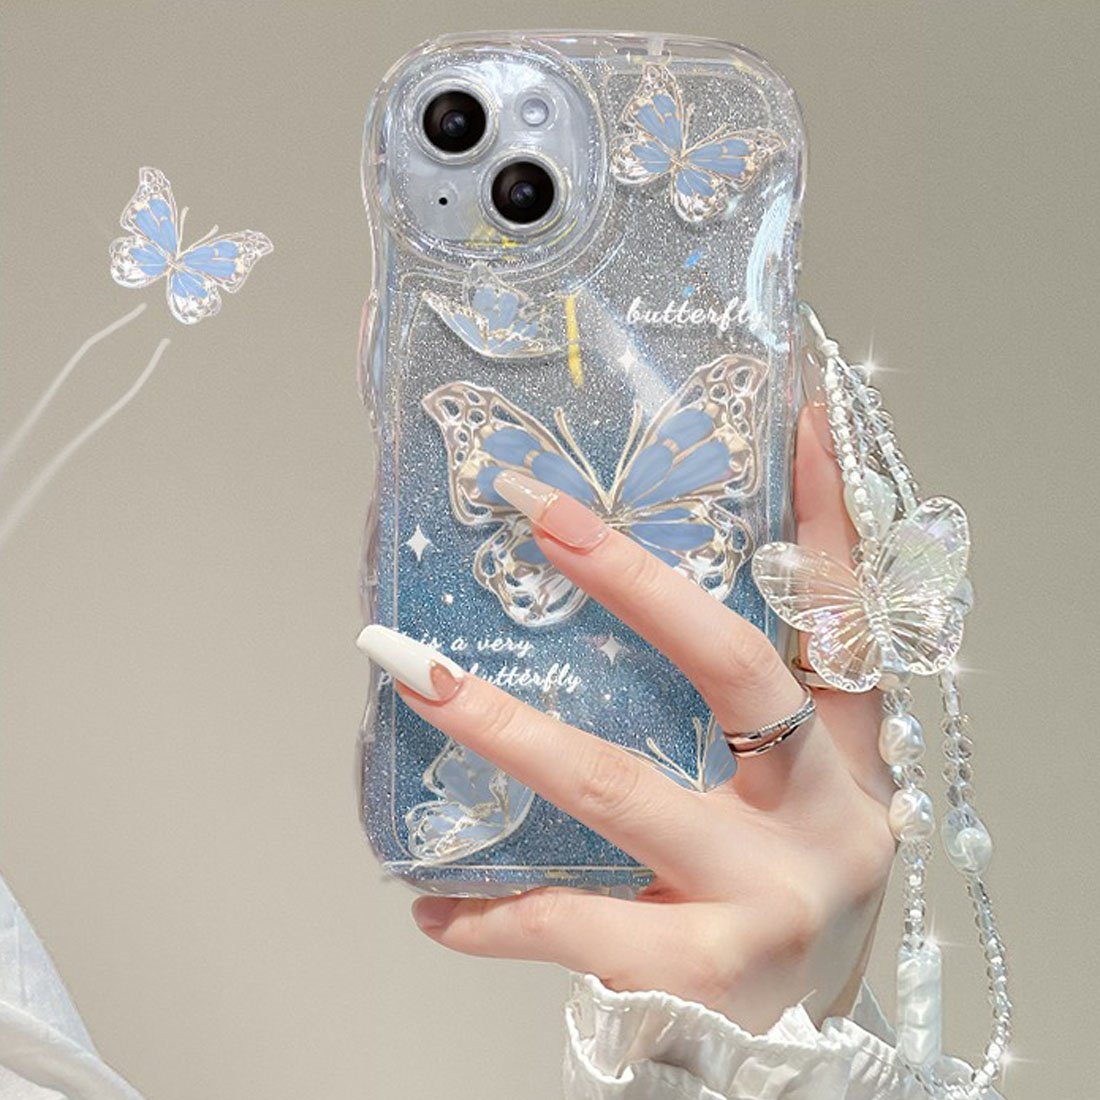 Hülle Handytasche blau DÖRÖY Silikonhülle,Silikon Handyhülle für iPhone 14/pro,Schmetterling